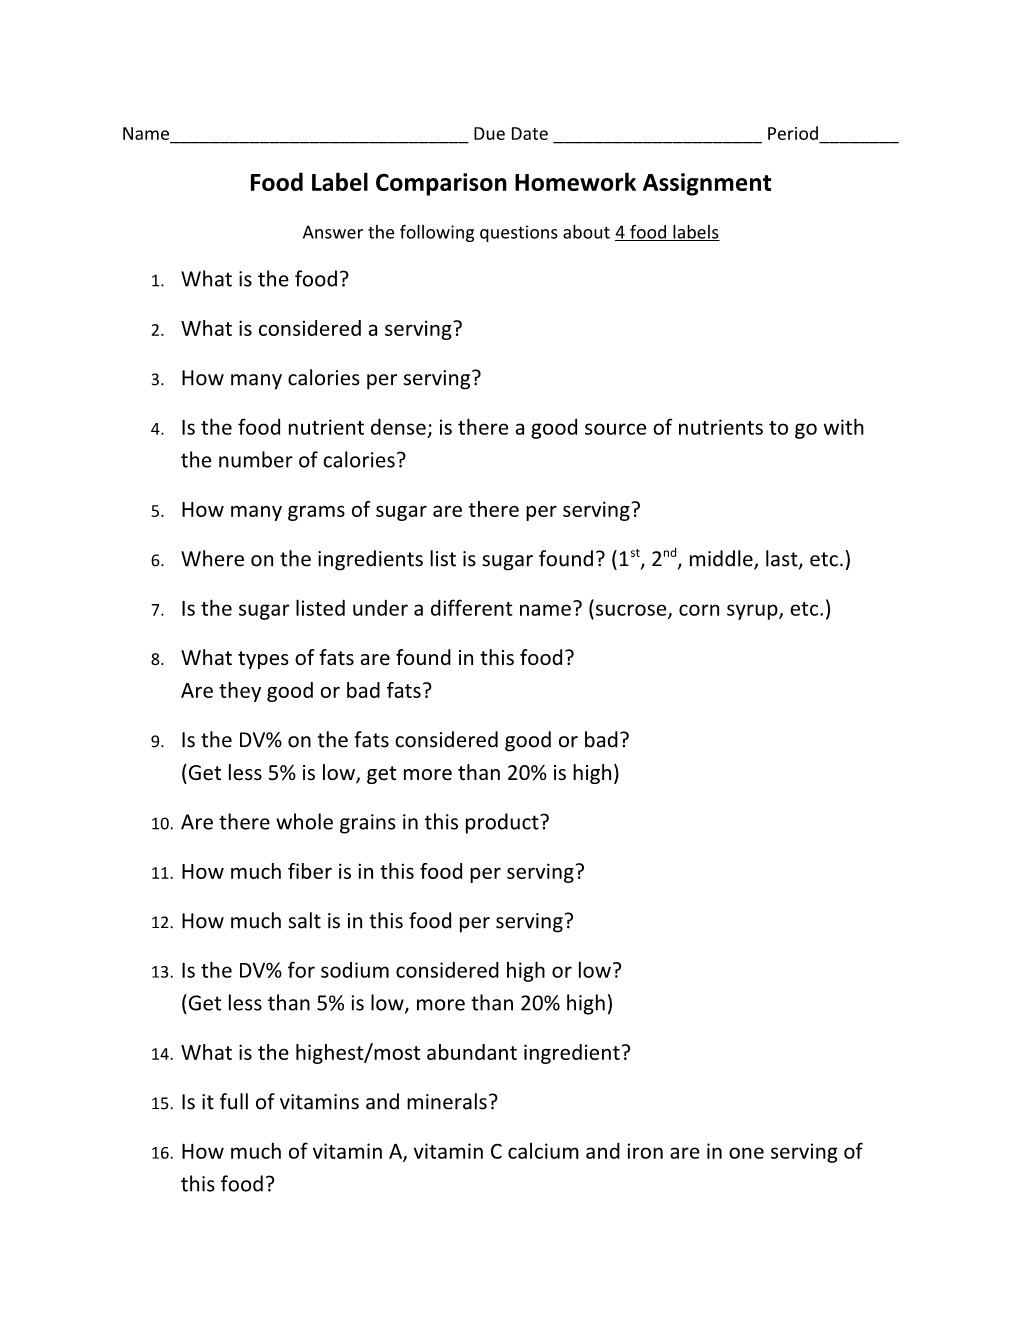 Food Label Comparison Homework Assignment